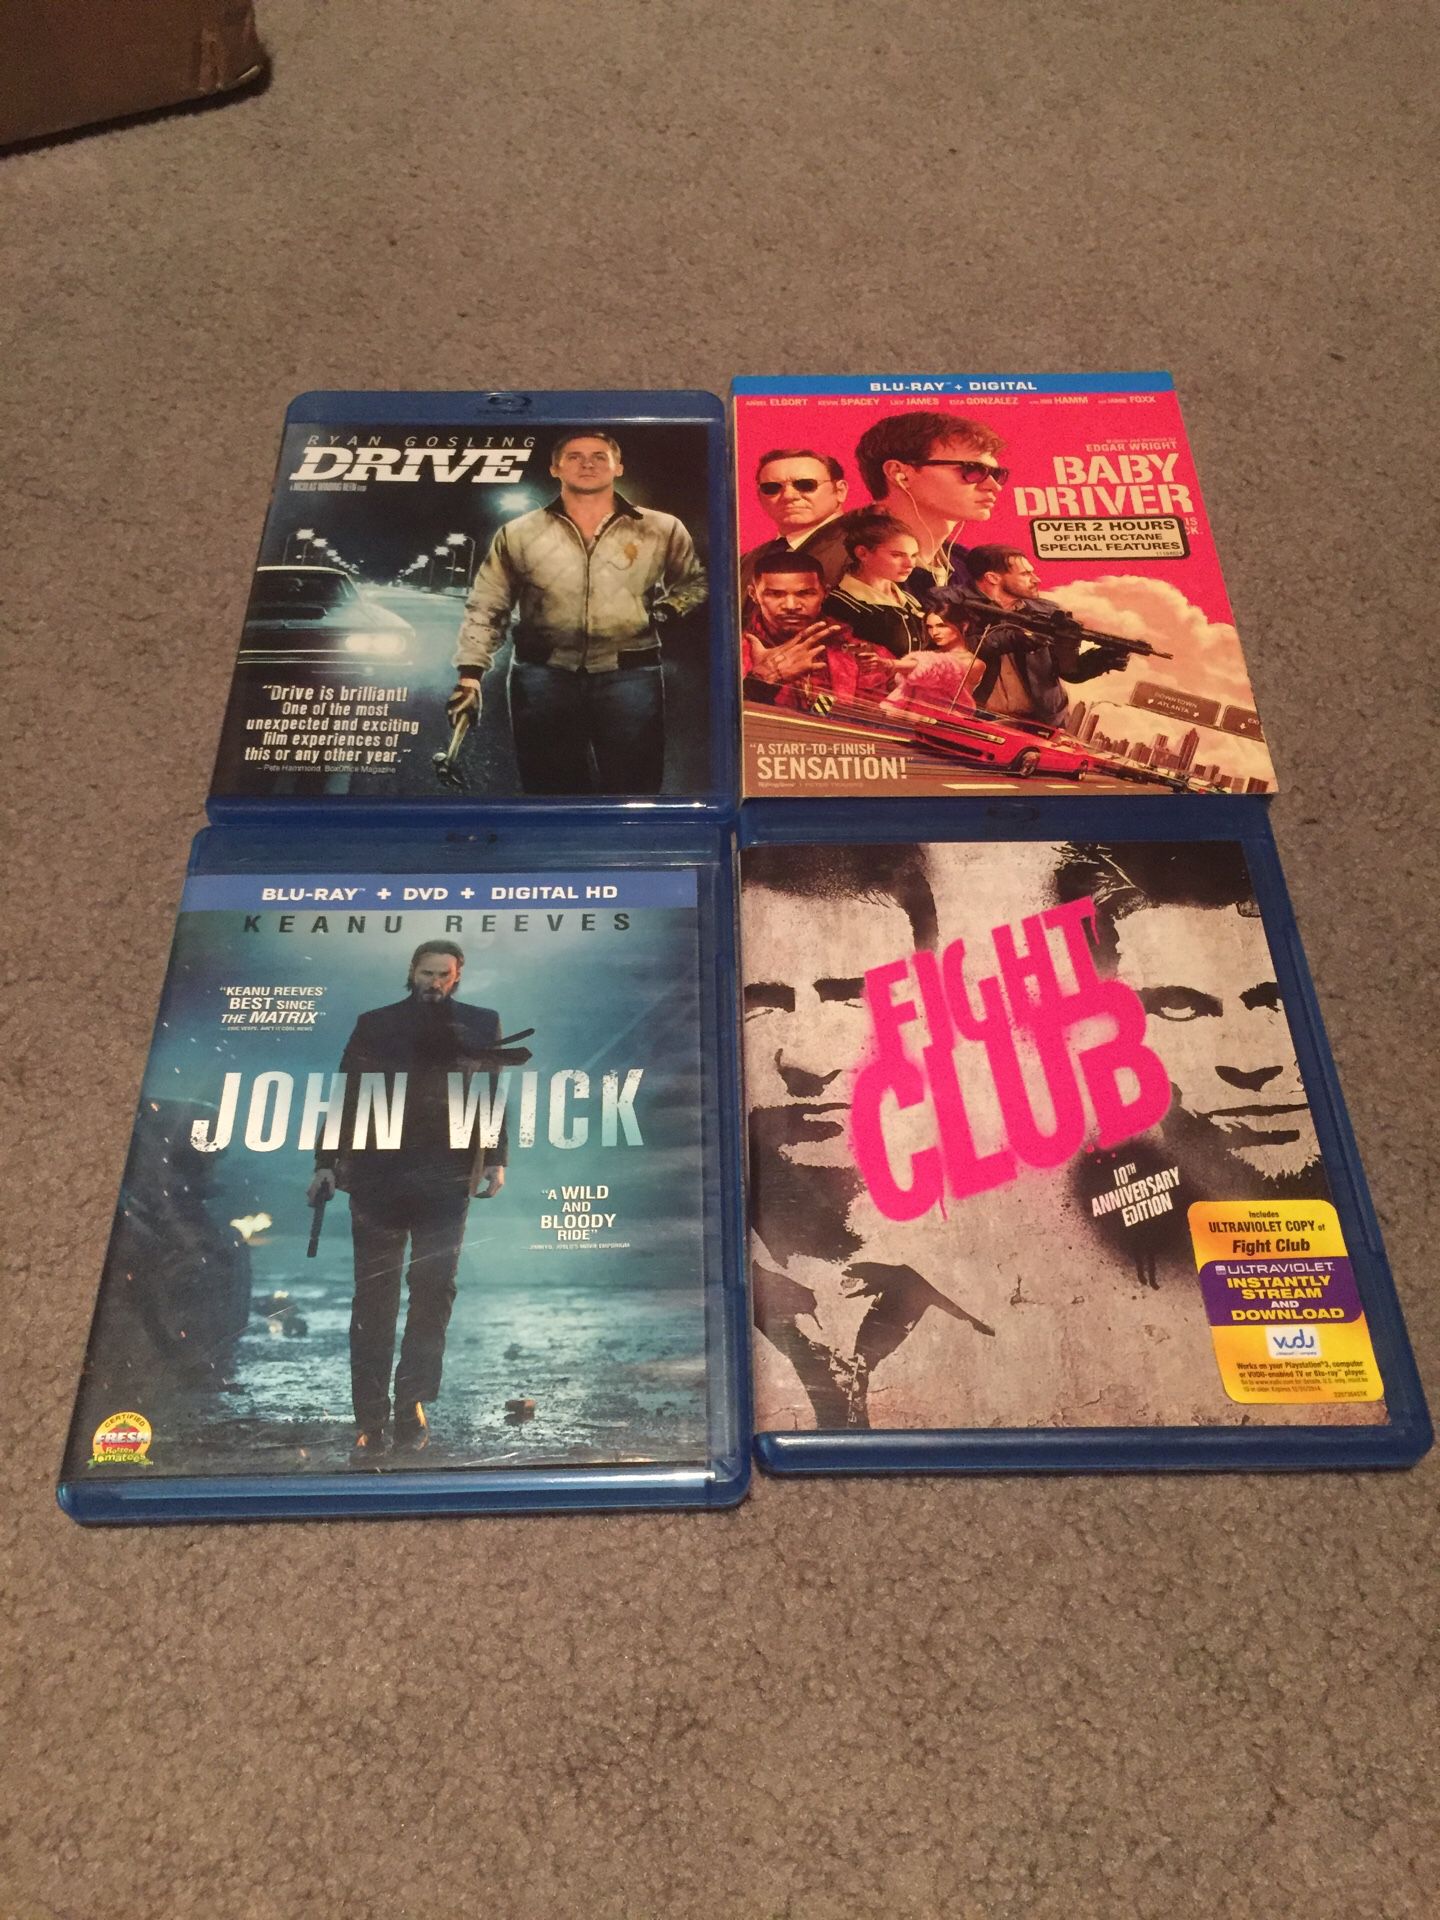 Blu ray dvd digital copies of movies